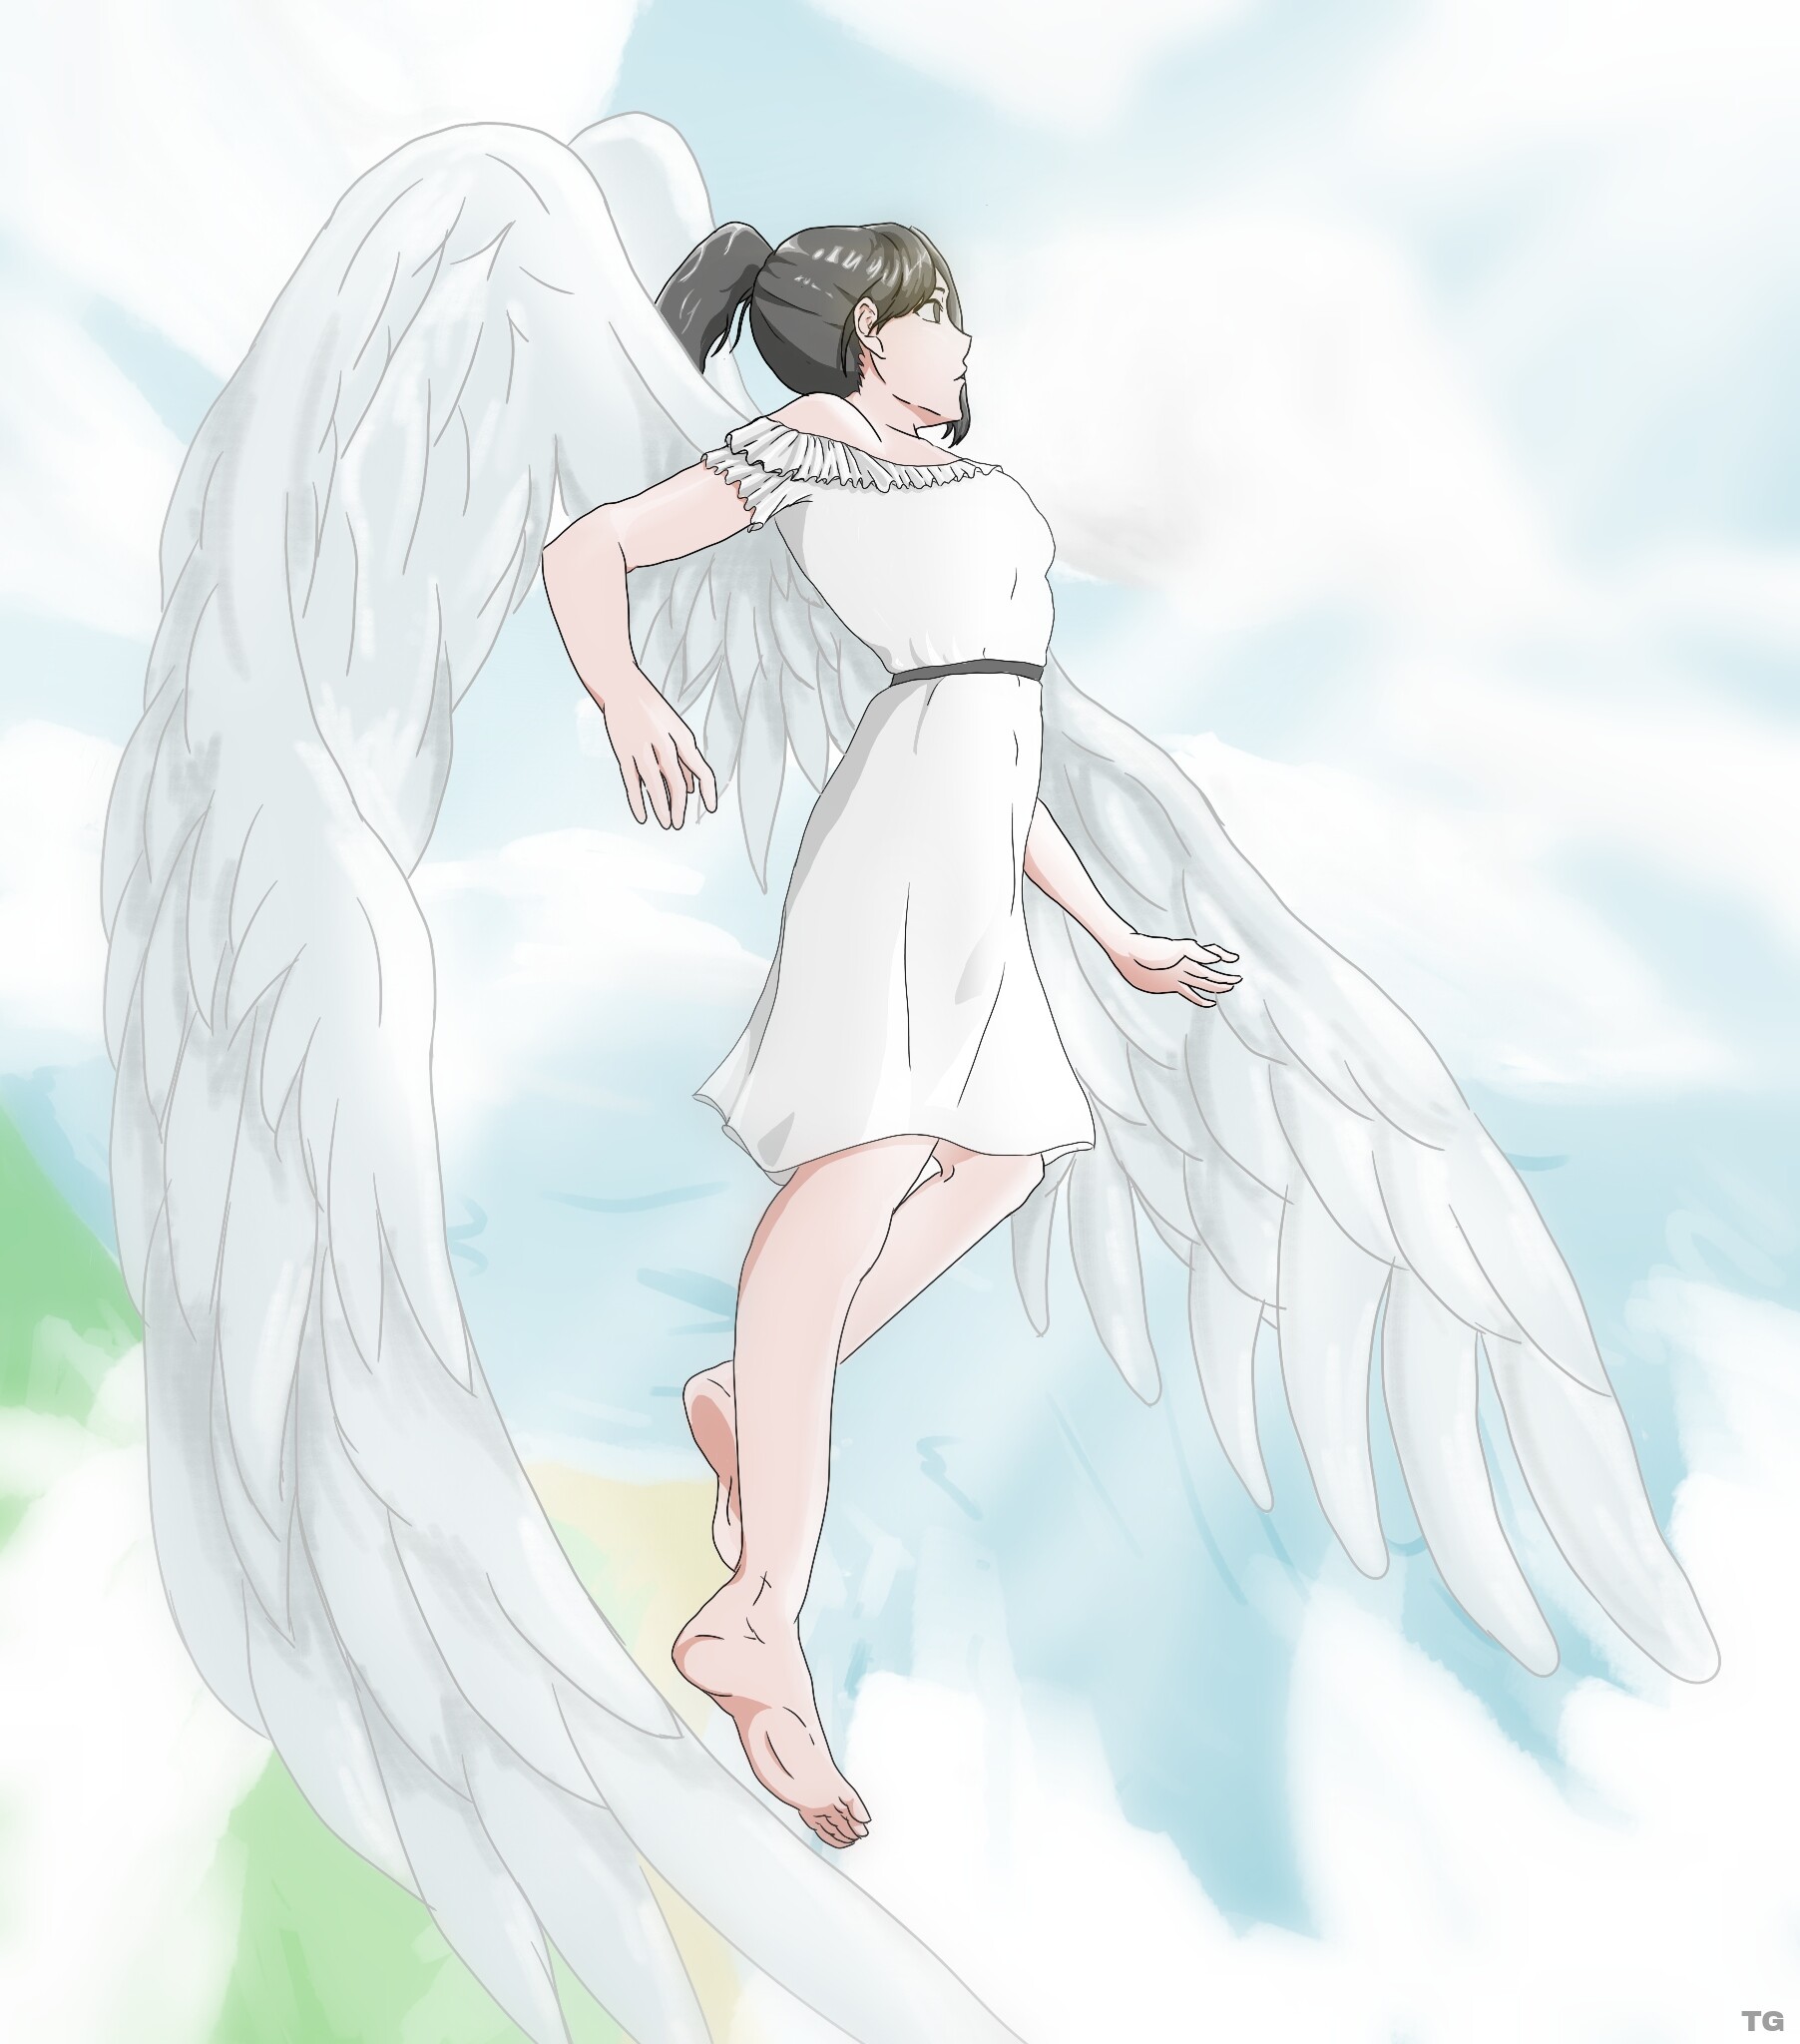 Artstation - Girl With Angel Wings